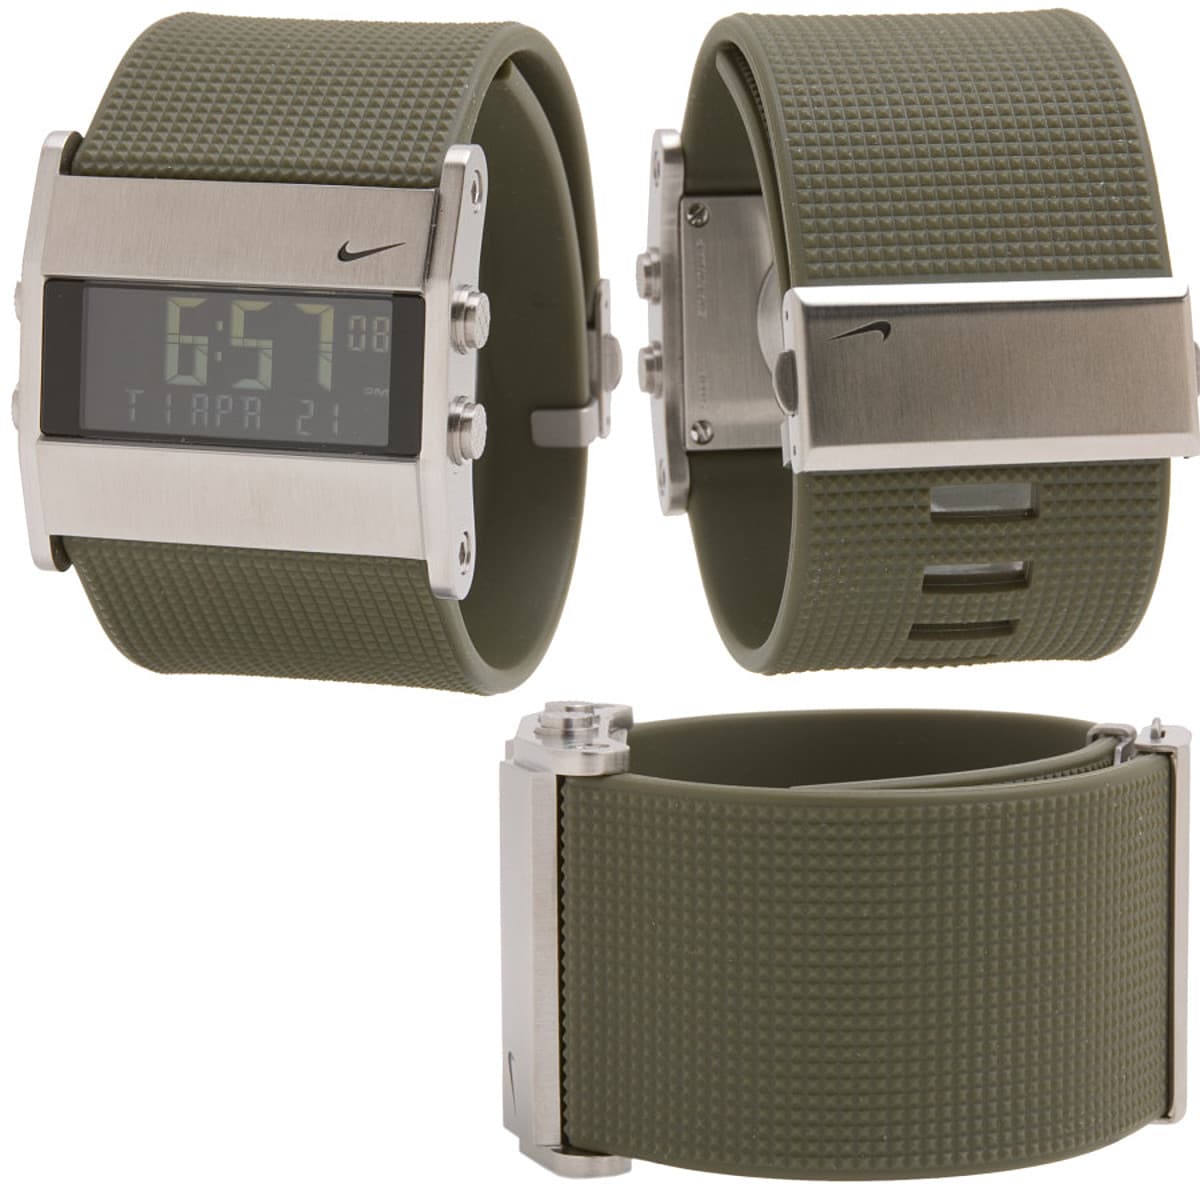 Nike Timing Oregon Series Square Digital Watch   Accessories